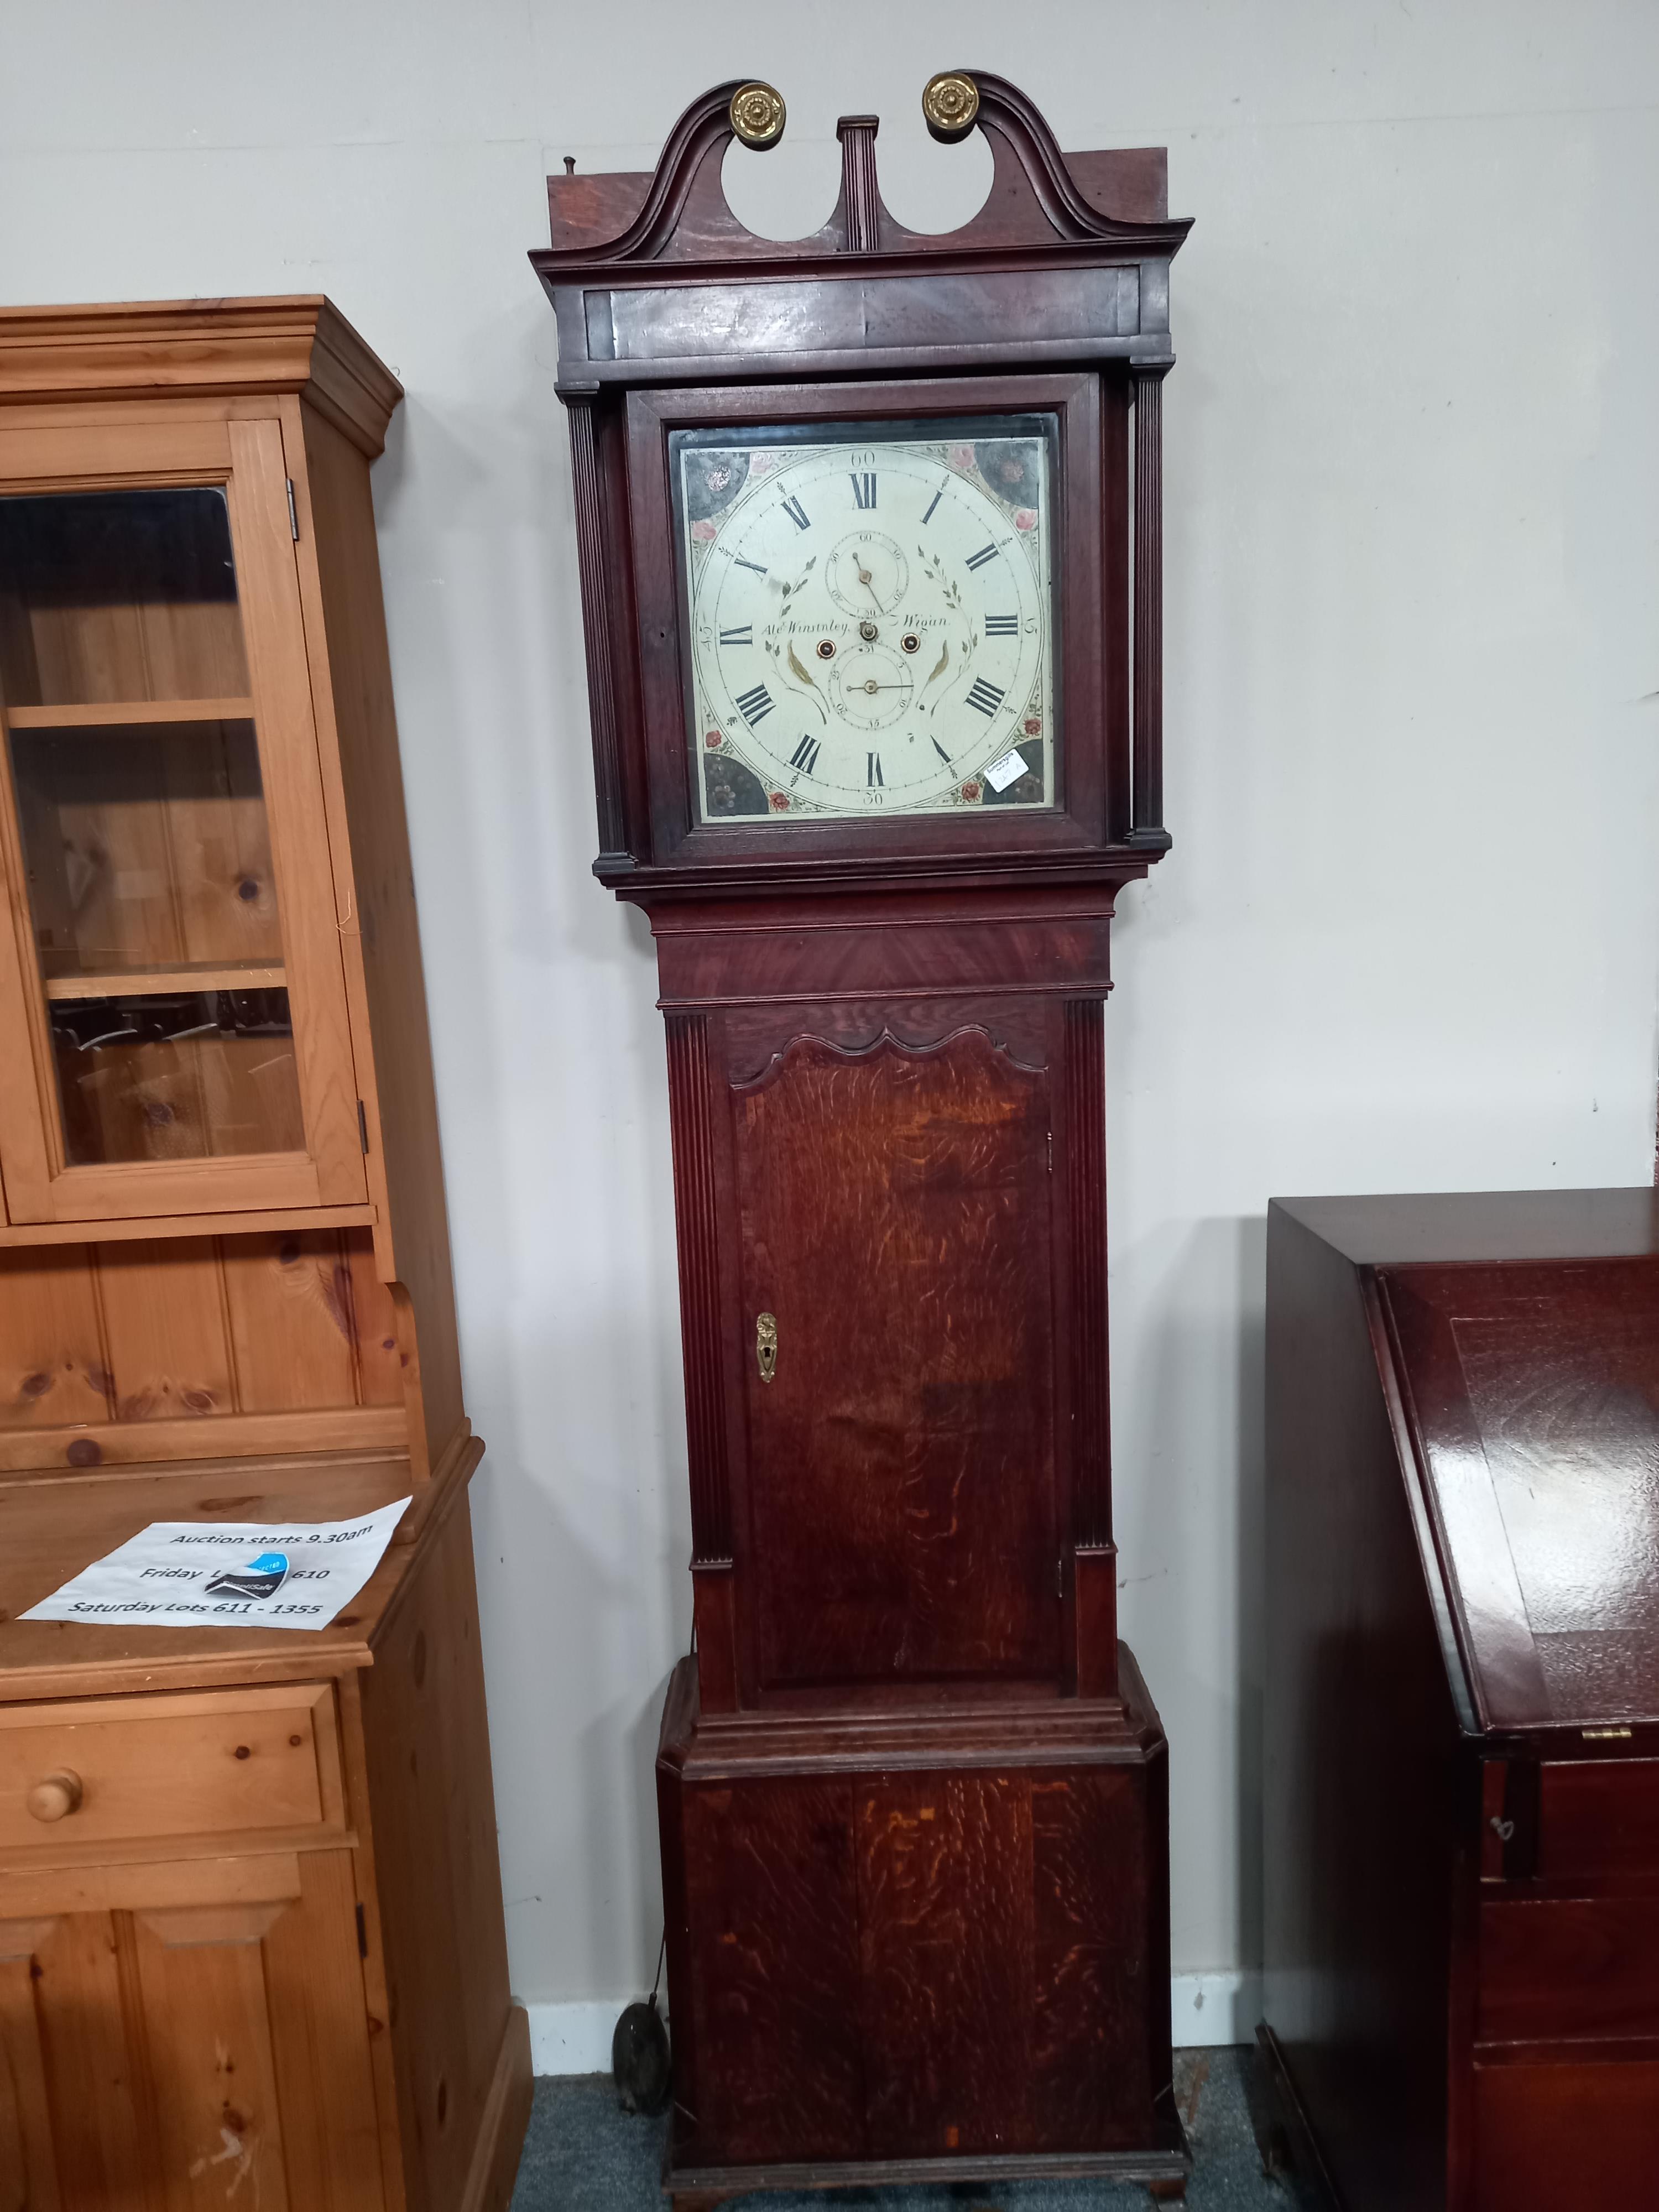 An 8 day long case clock by Alex Winstanley of Wigan